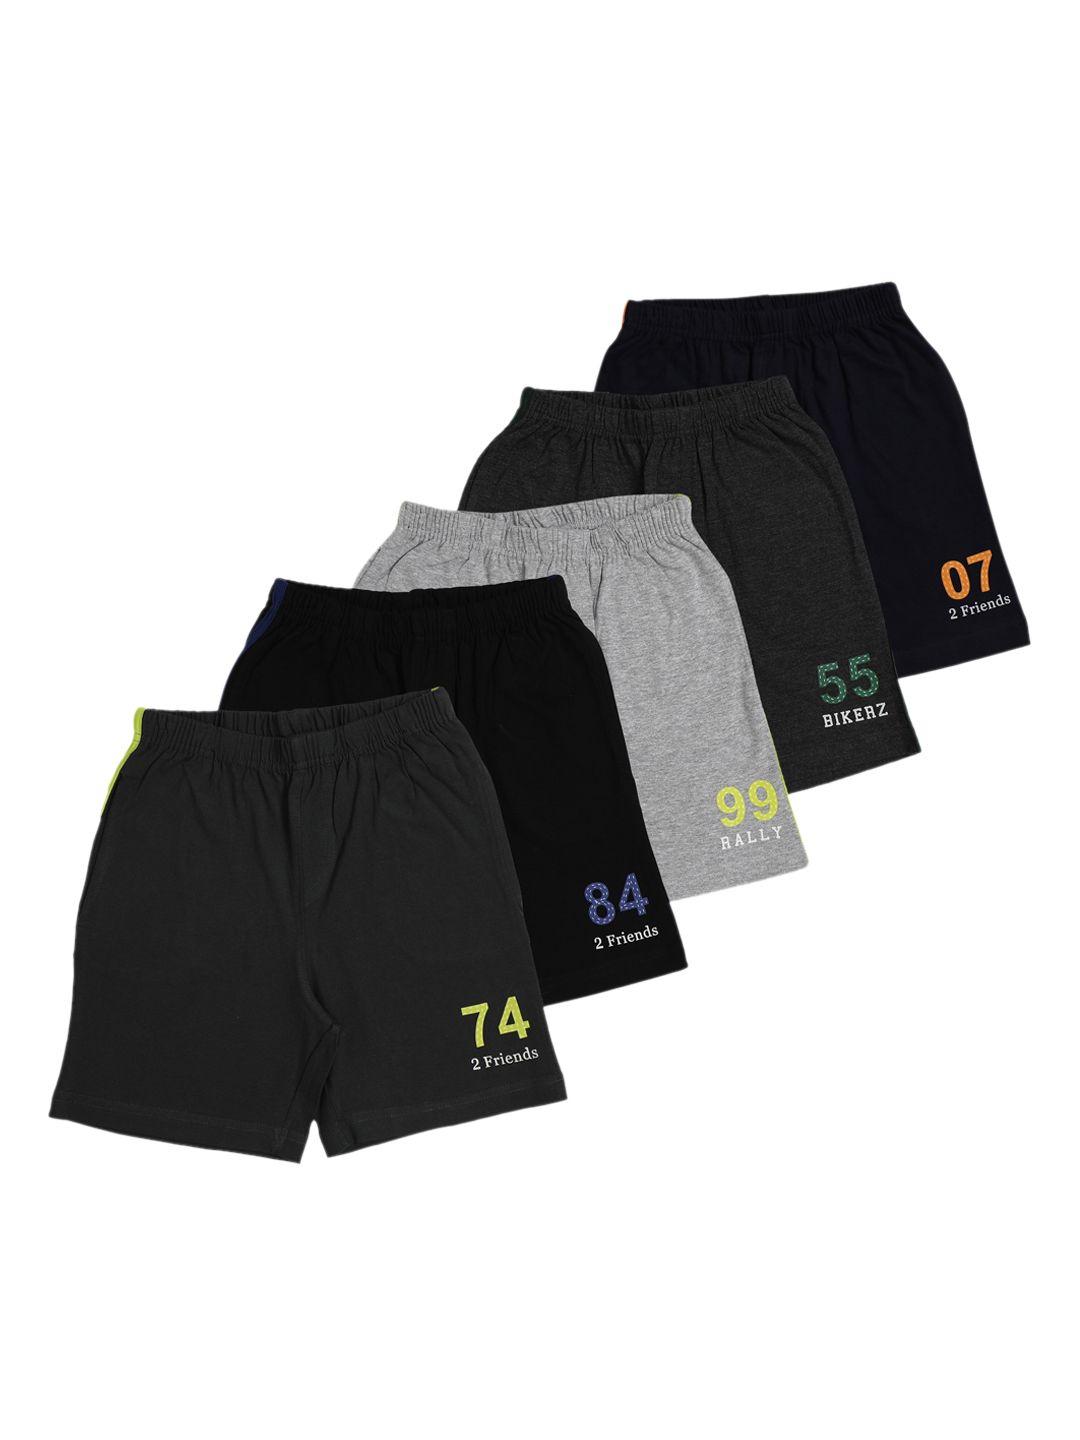 li'l cupid boys pack of 5 assorted sports shorts